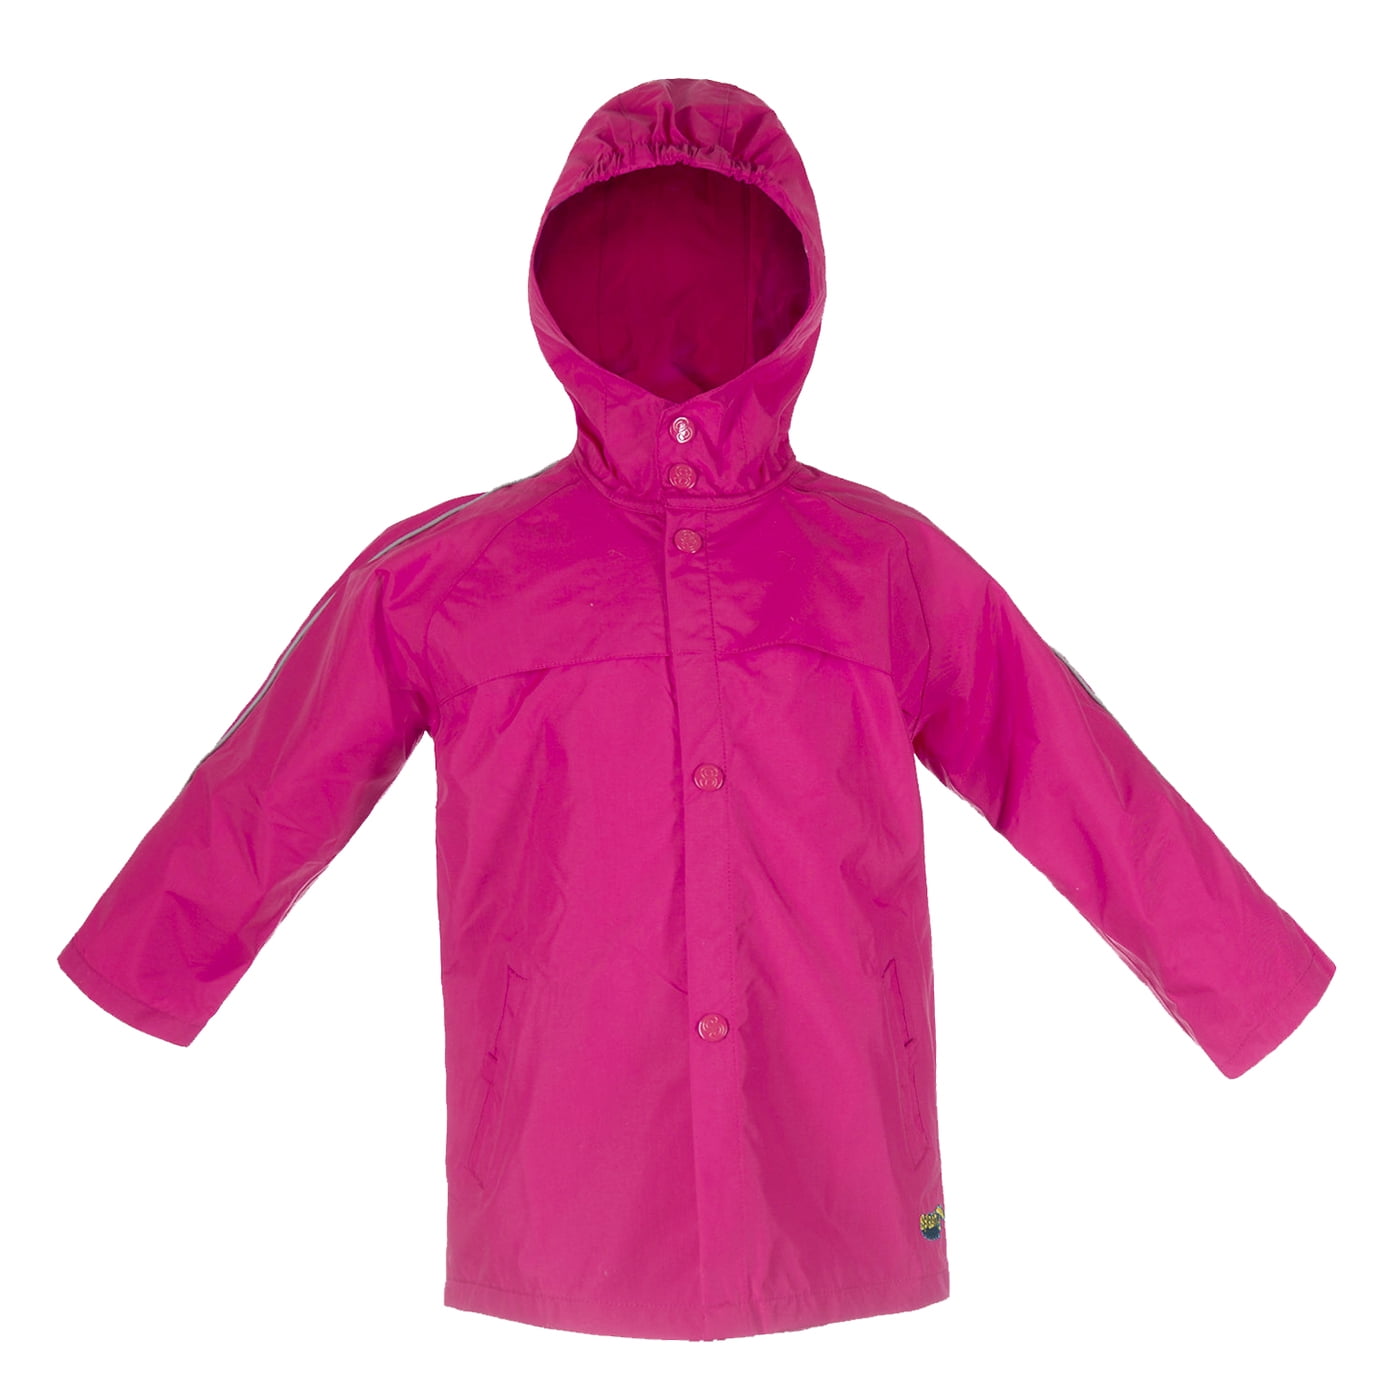 Splashy Children's Rain Jacket (Hot Pink, 2T) - Walmart.com